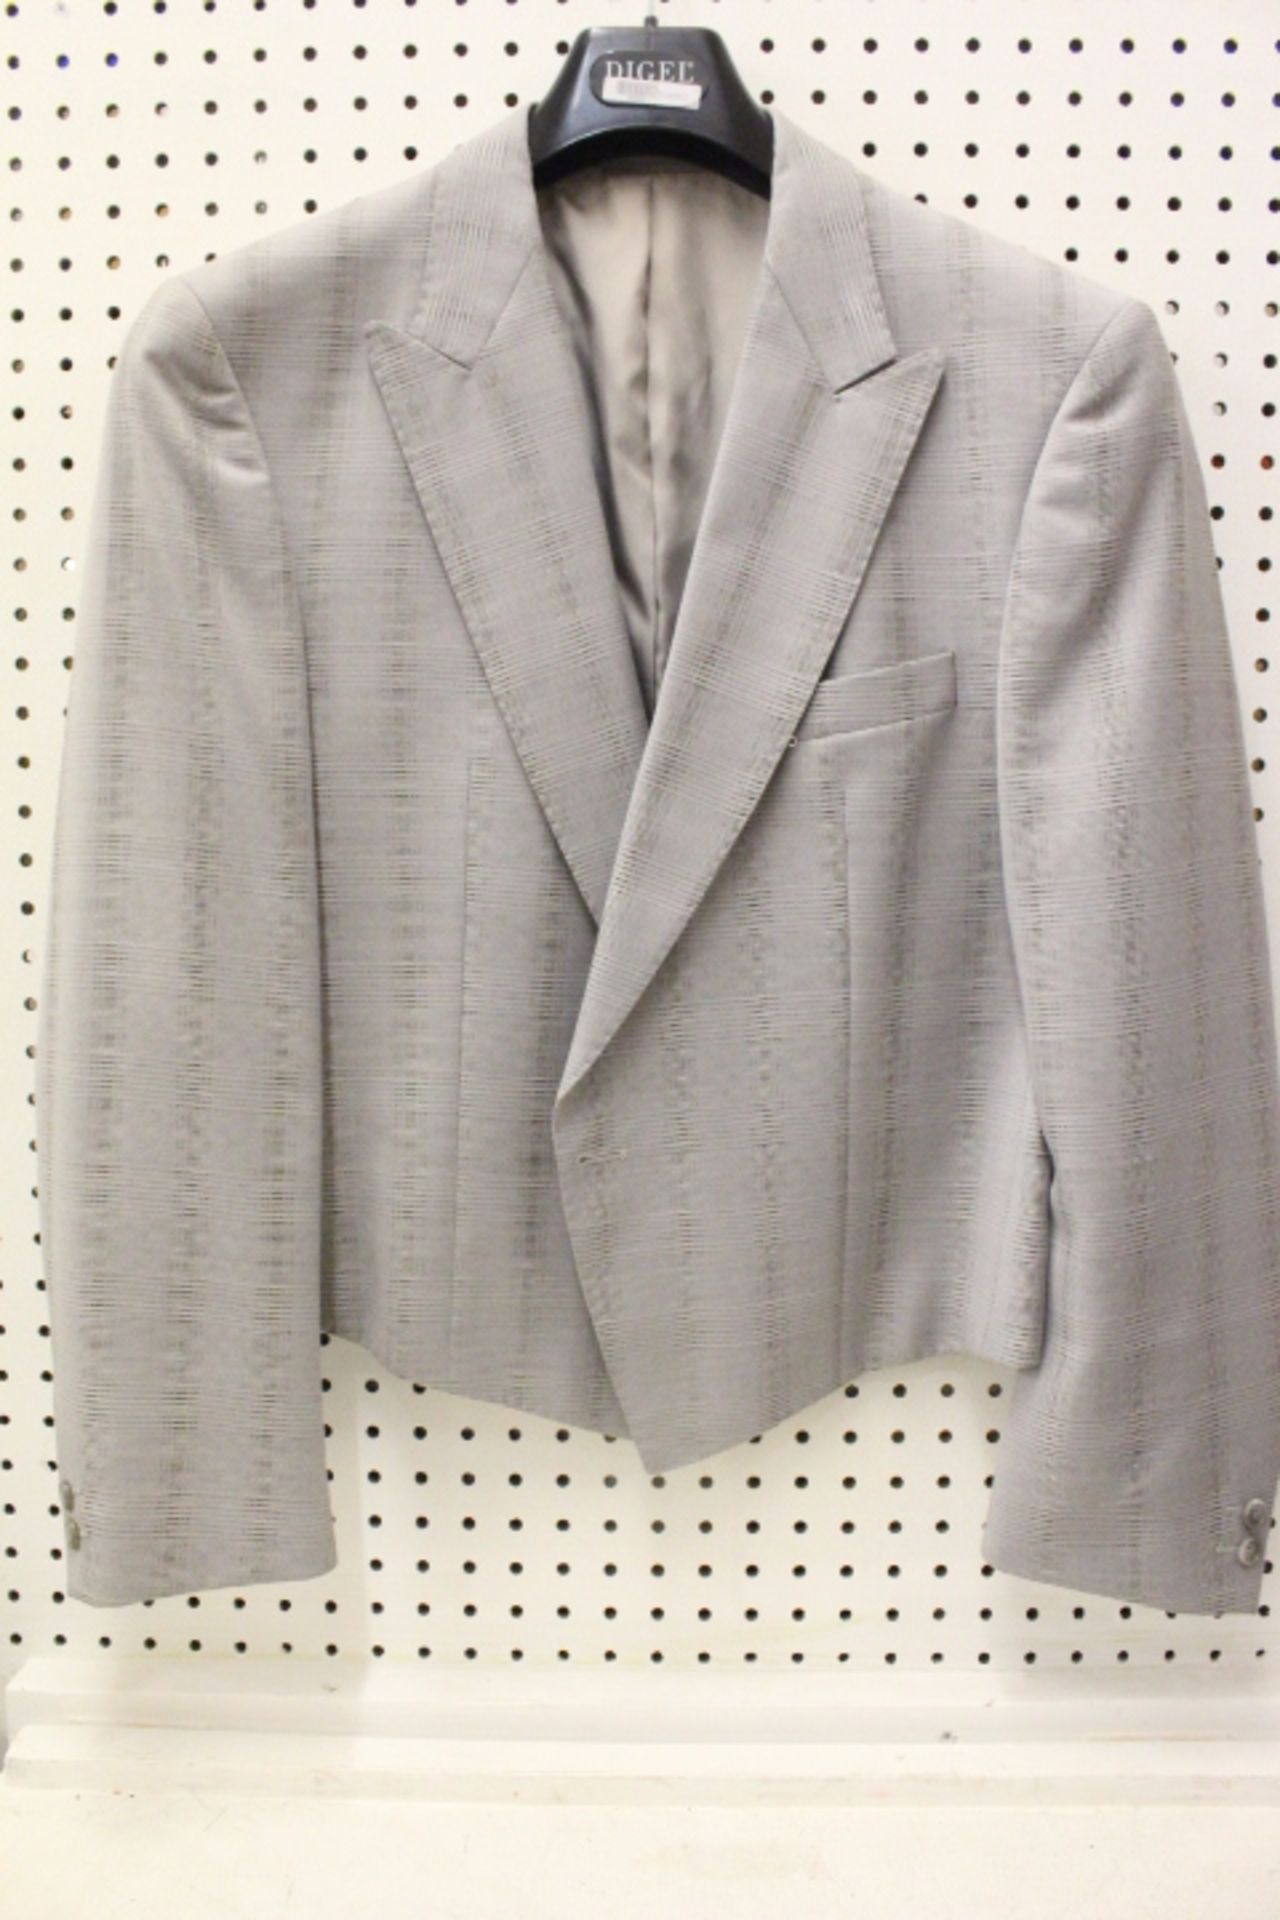 Gents Mario Barutti Light Grey Tuxedo/Kilt Jacket Size 50